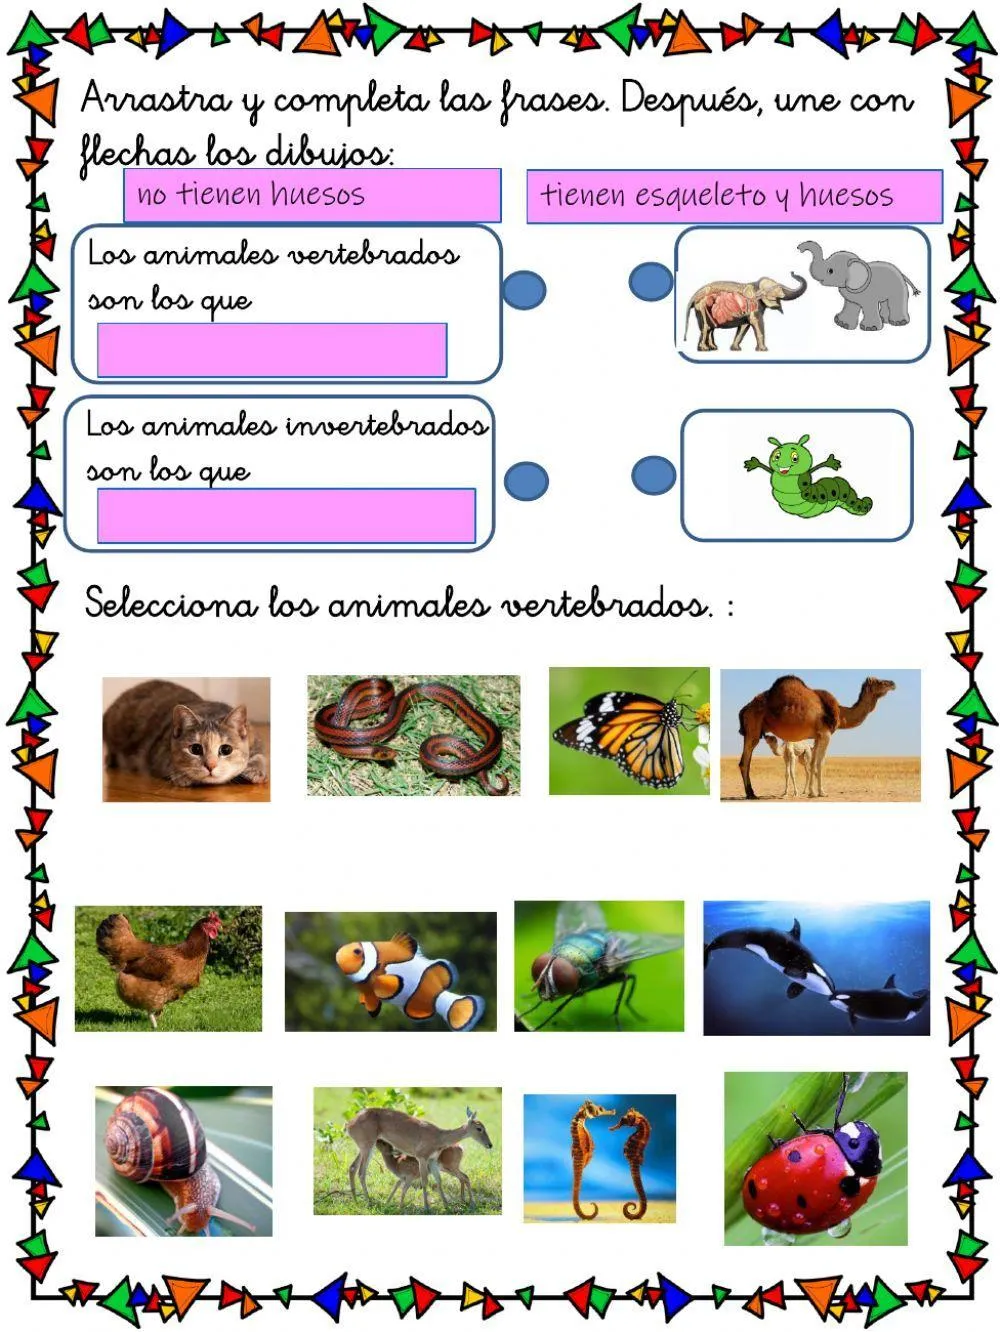 Vertebrados invertebrados worksheet | Live Worksheets